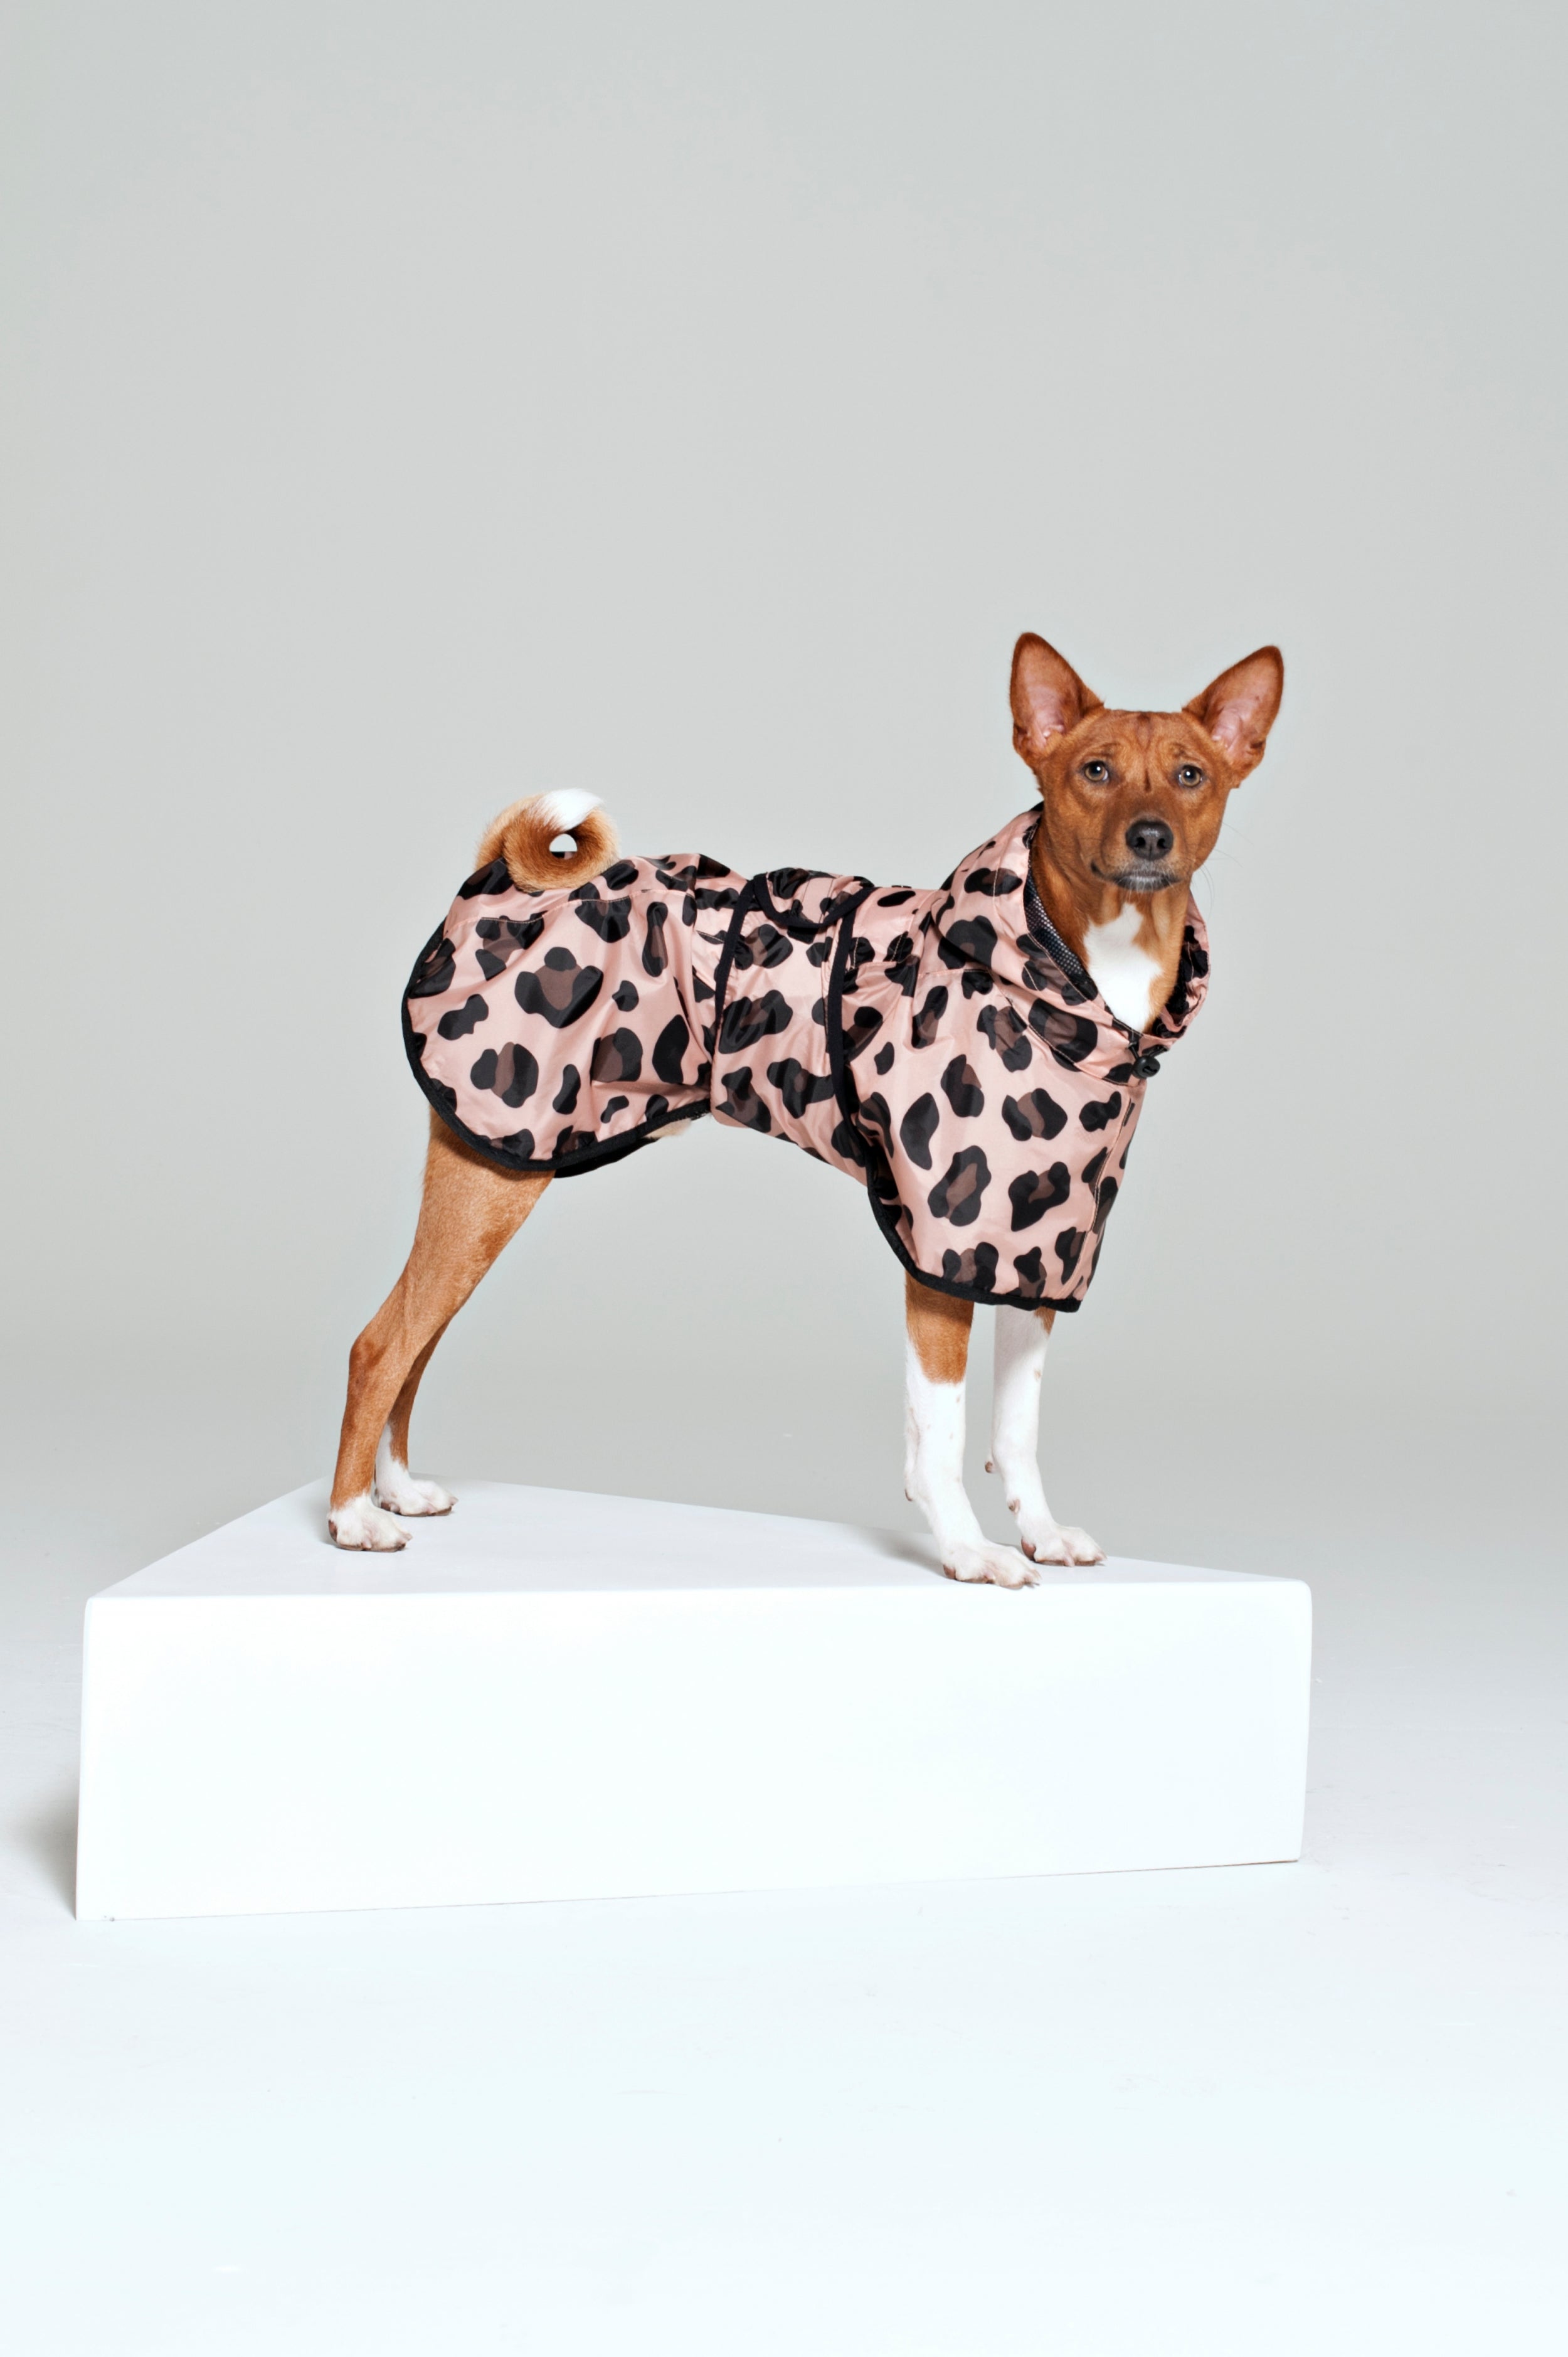 Poncho impermeable portable para perros - Doglemi - Cochikis Pet Shop